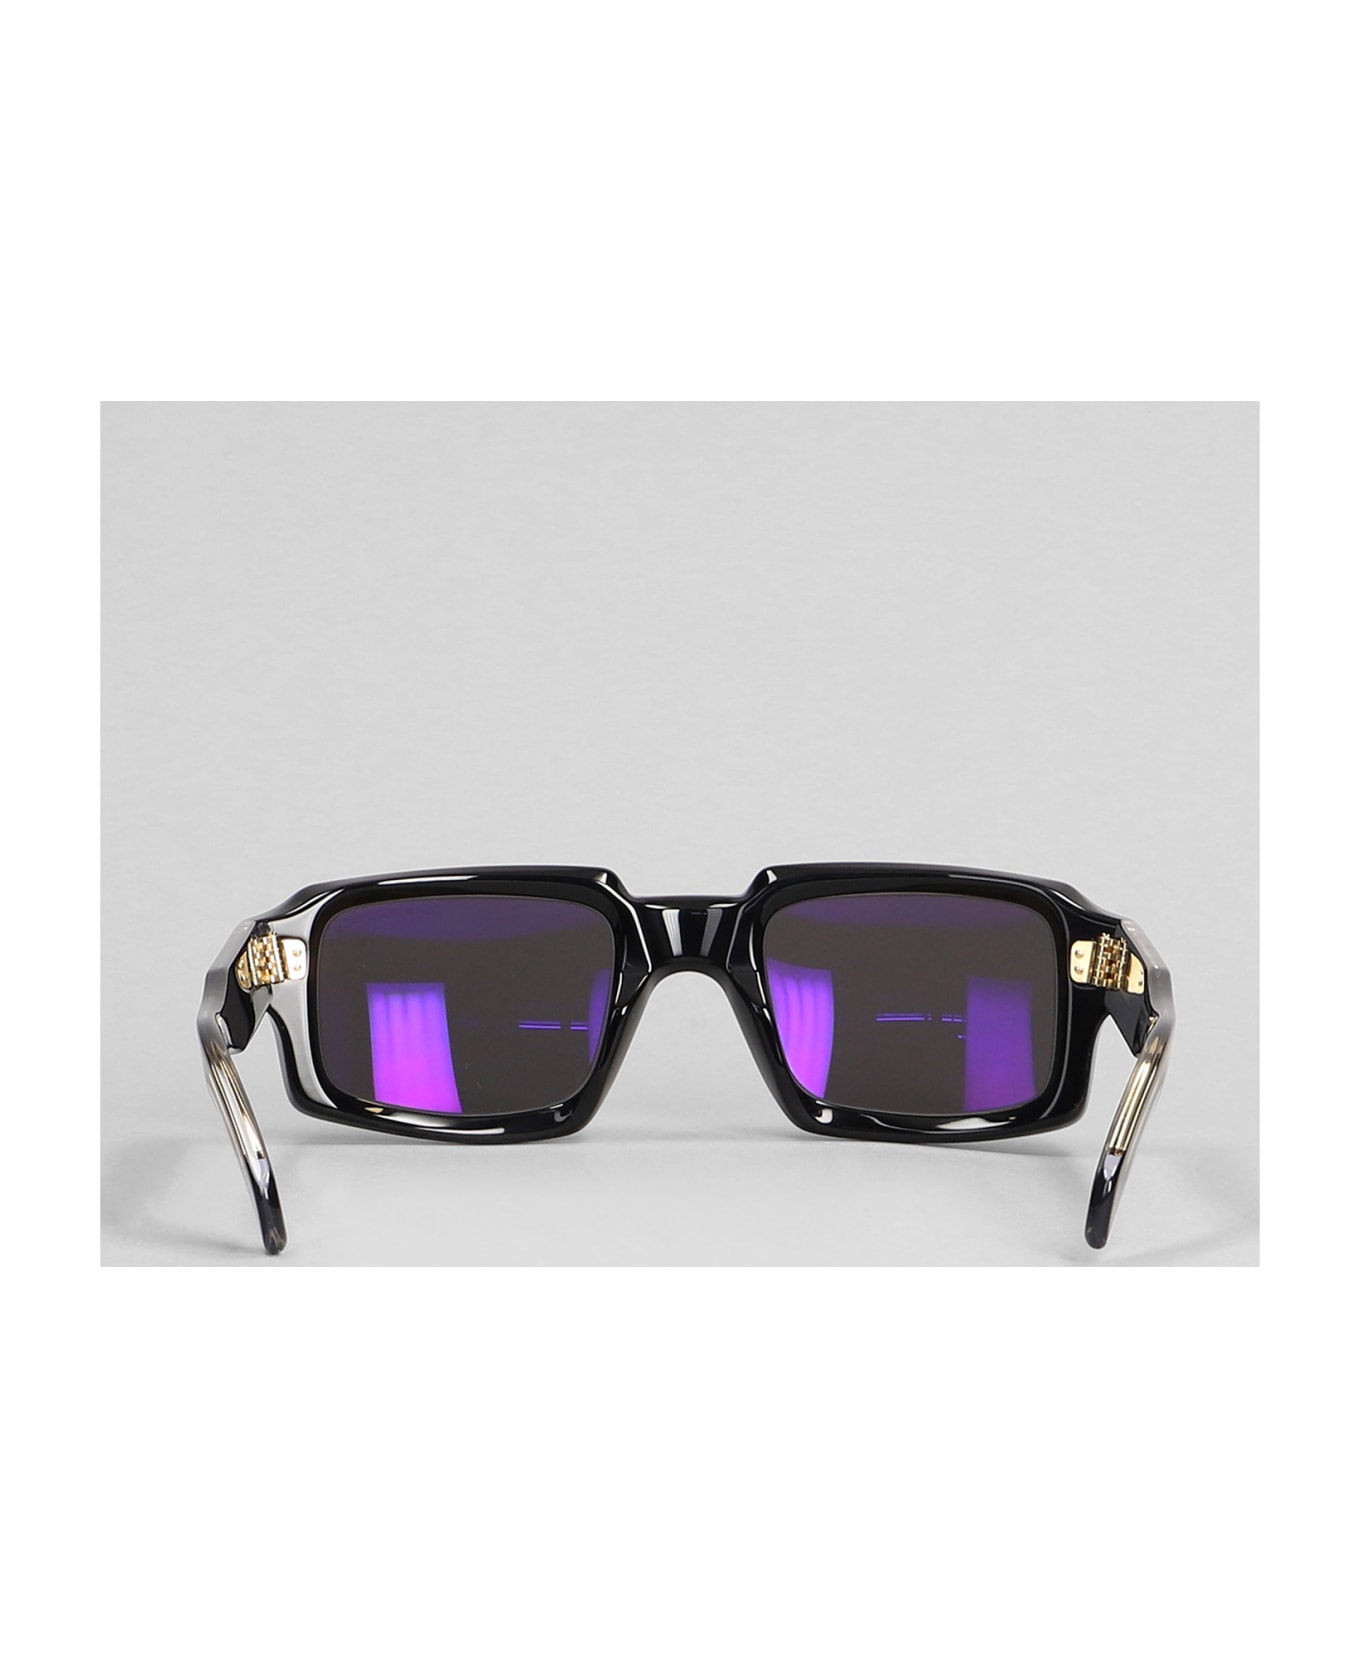 Cutler and Gross 9495 Sunglasses In Black Acetate - black